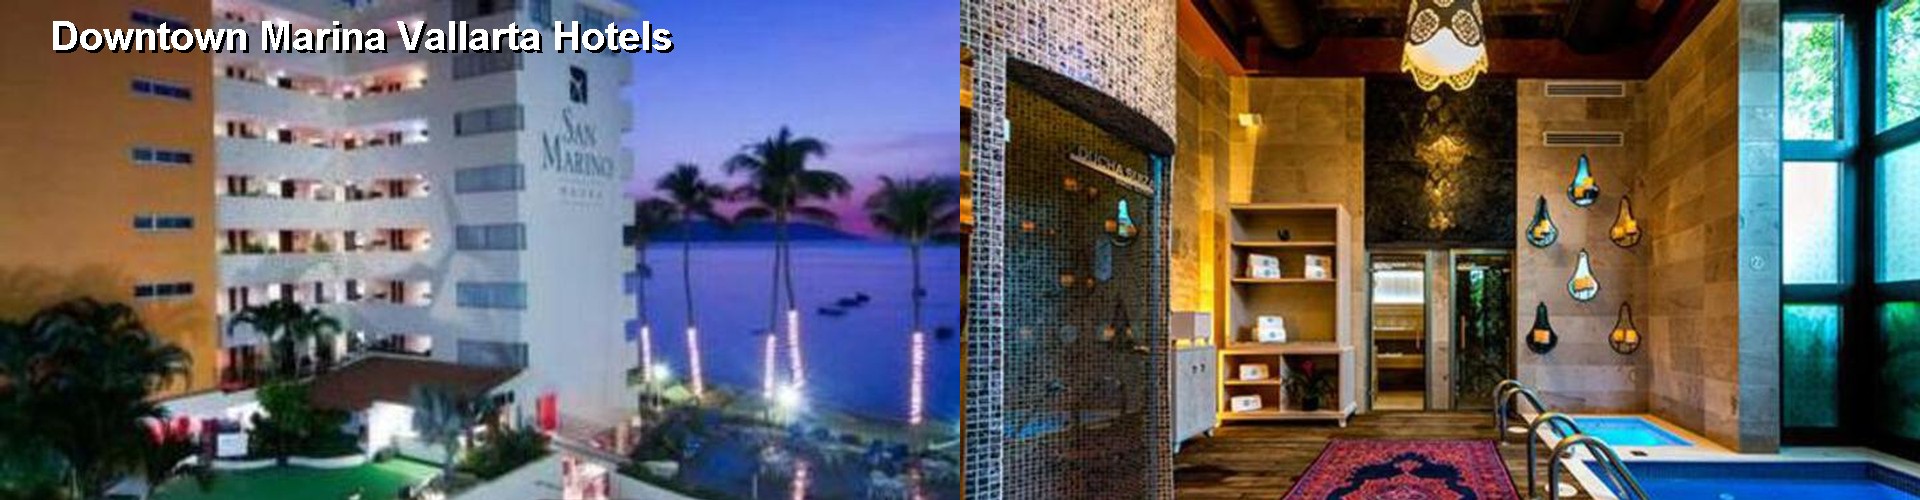 5 Best Hotels near Downtown Marina Vallarta